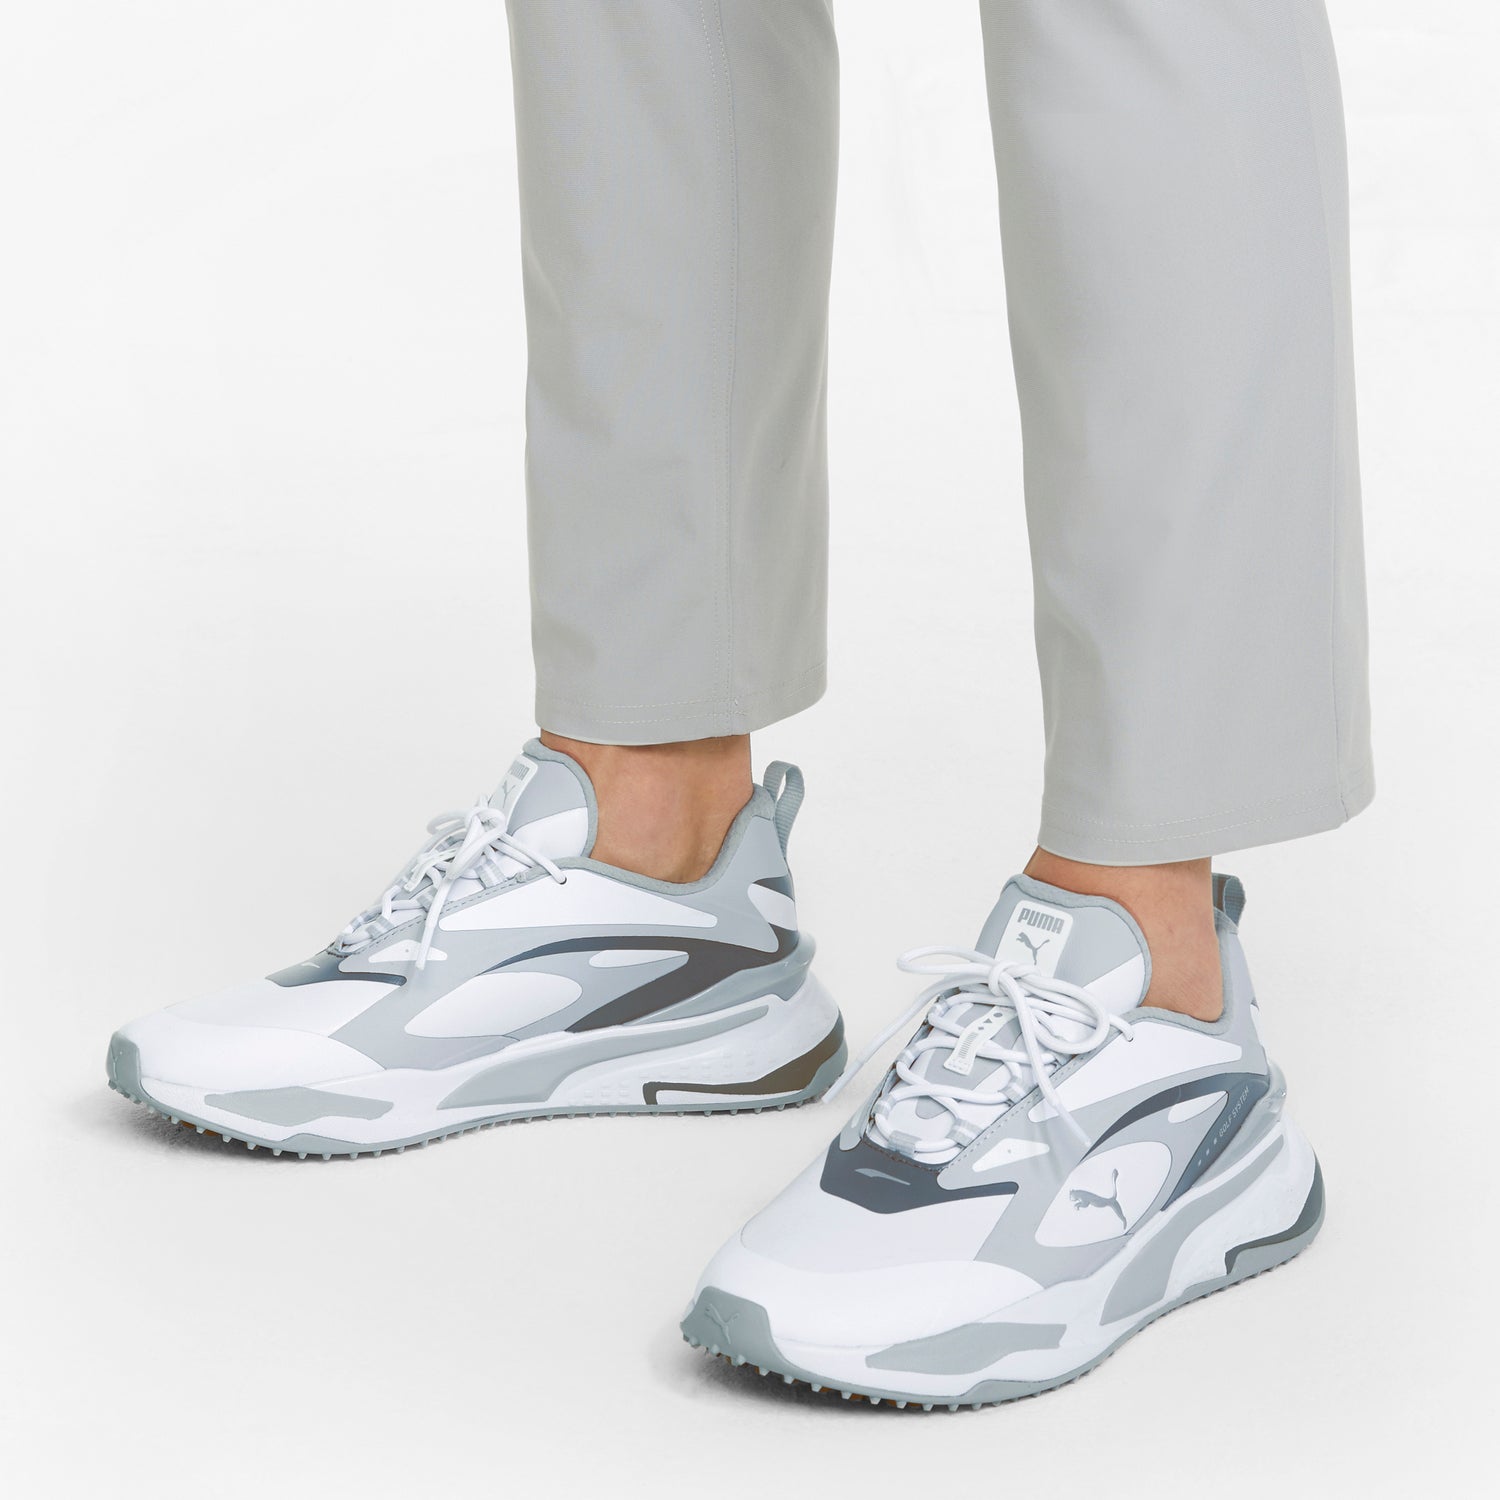 GS-FAST Spikeless Golf Shoes